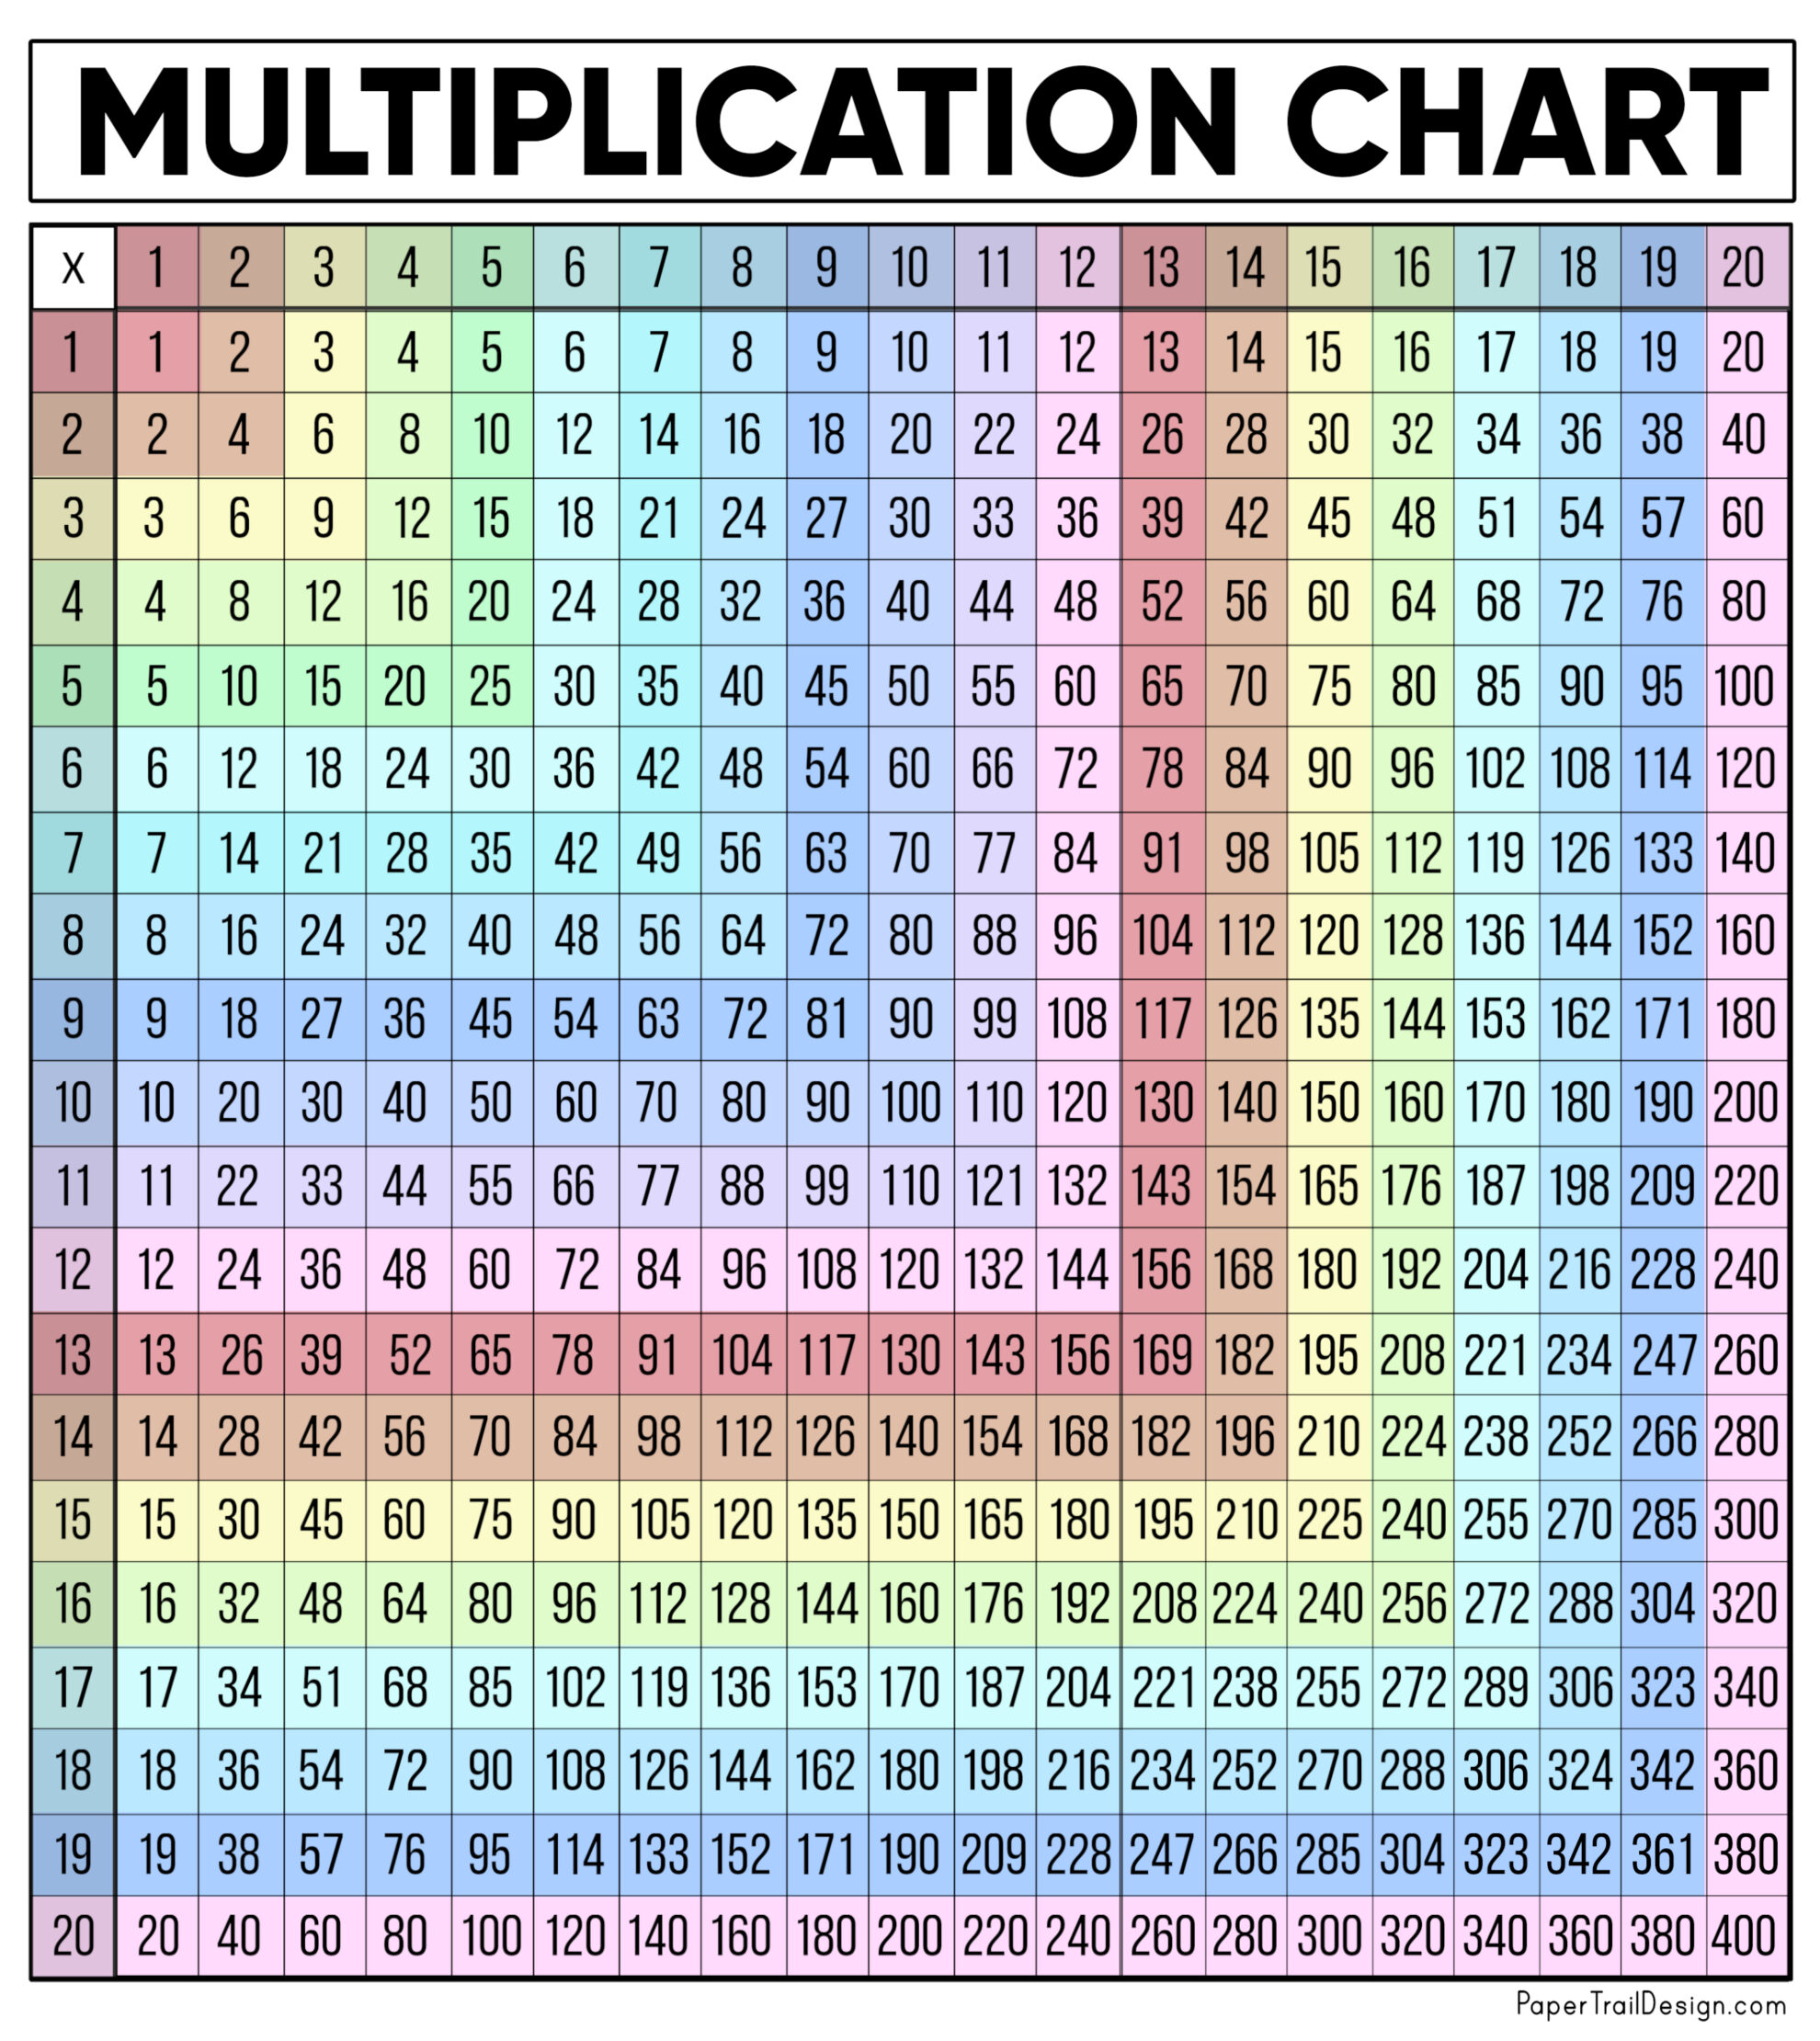 Multiplication Chart 20 X 20 